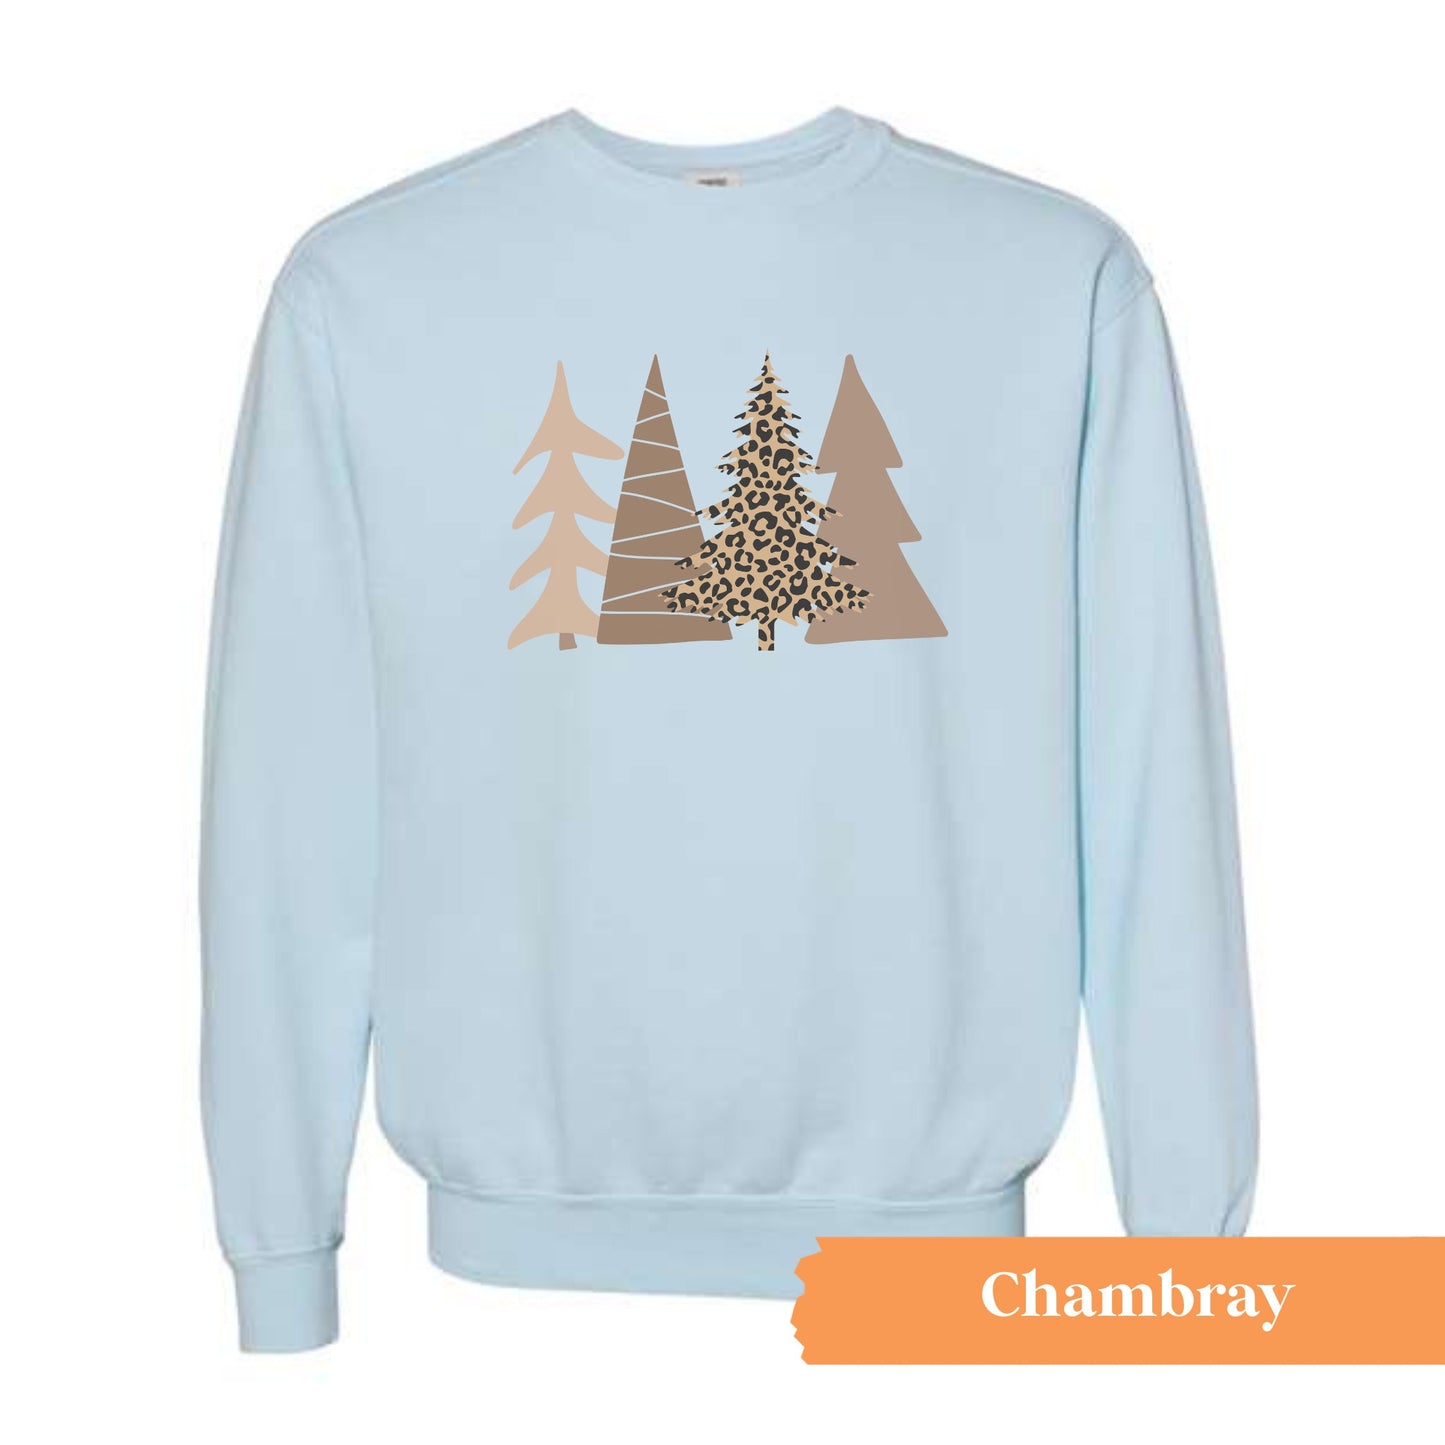 Leopard Christmas Trees Crewneck Sweatshirt